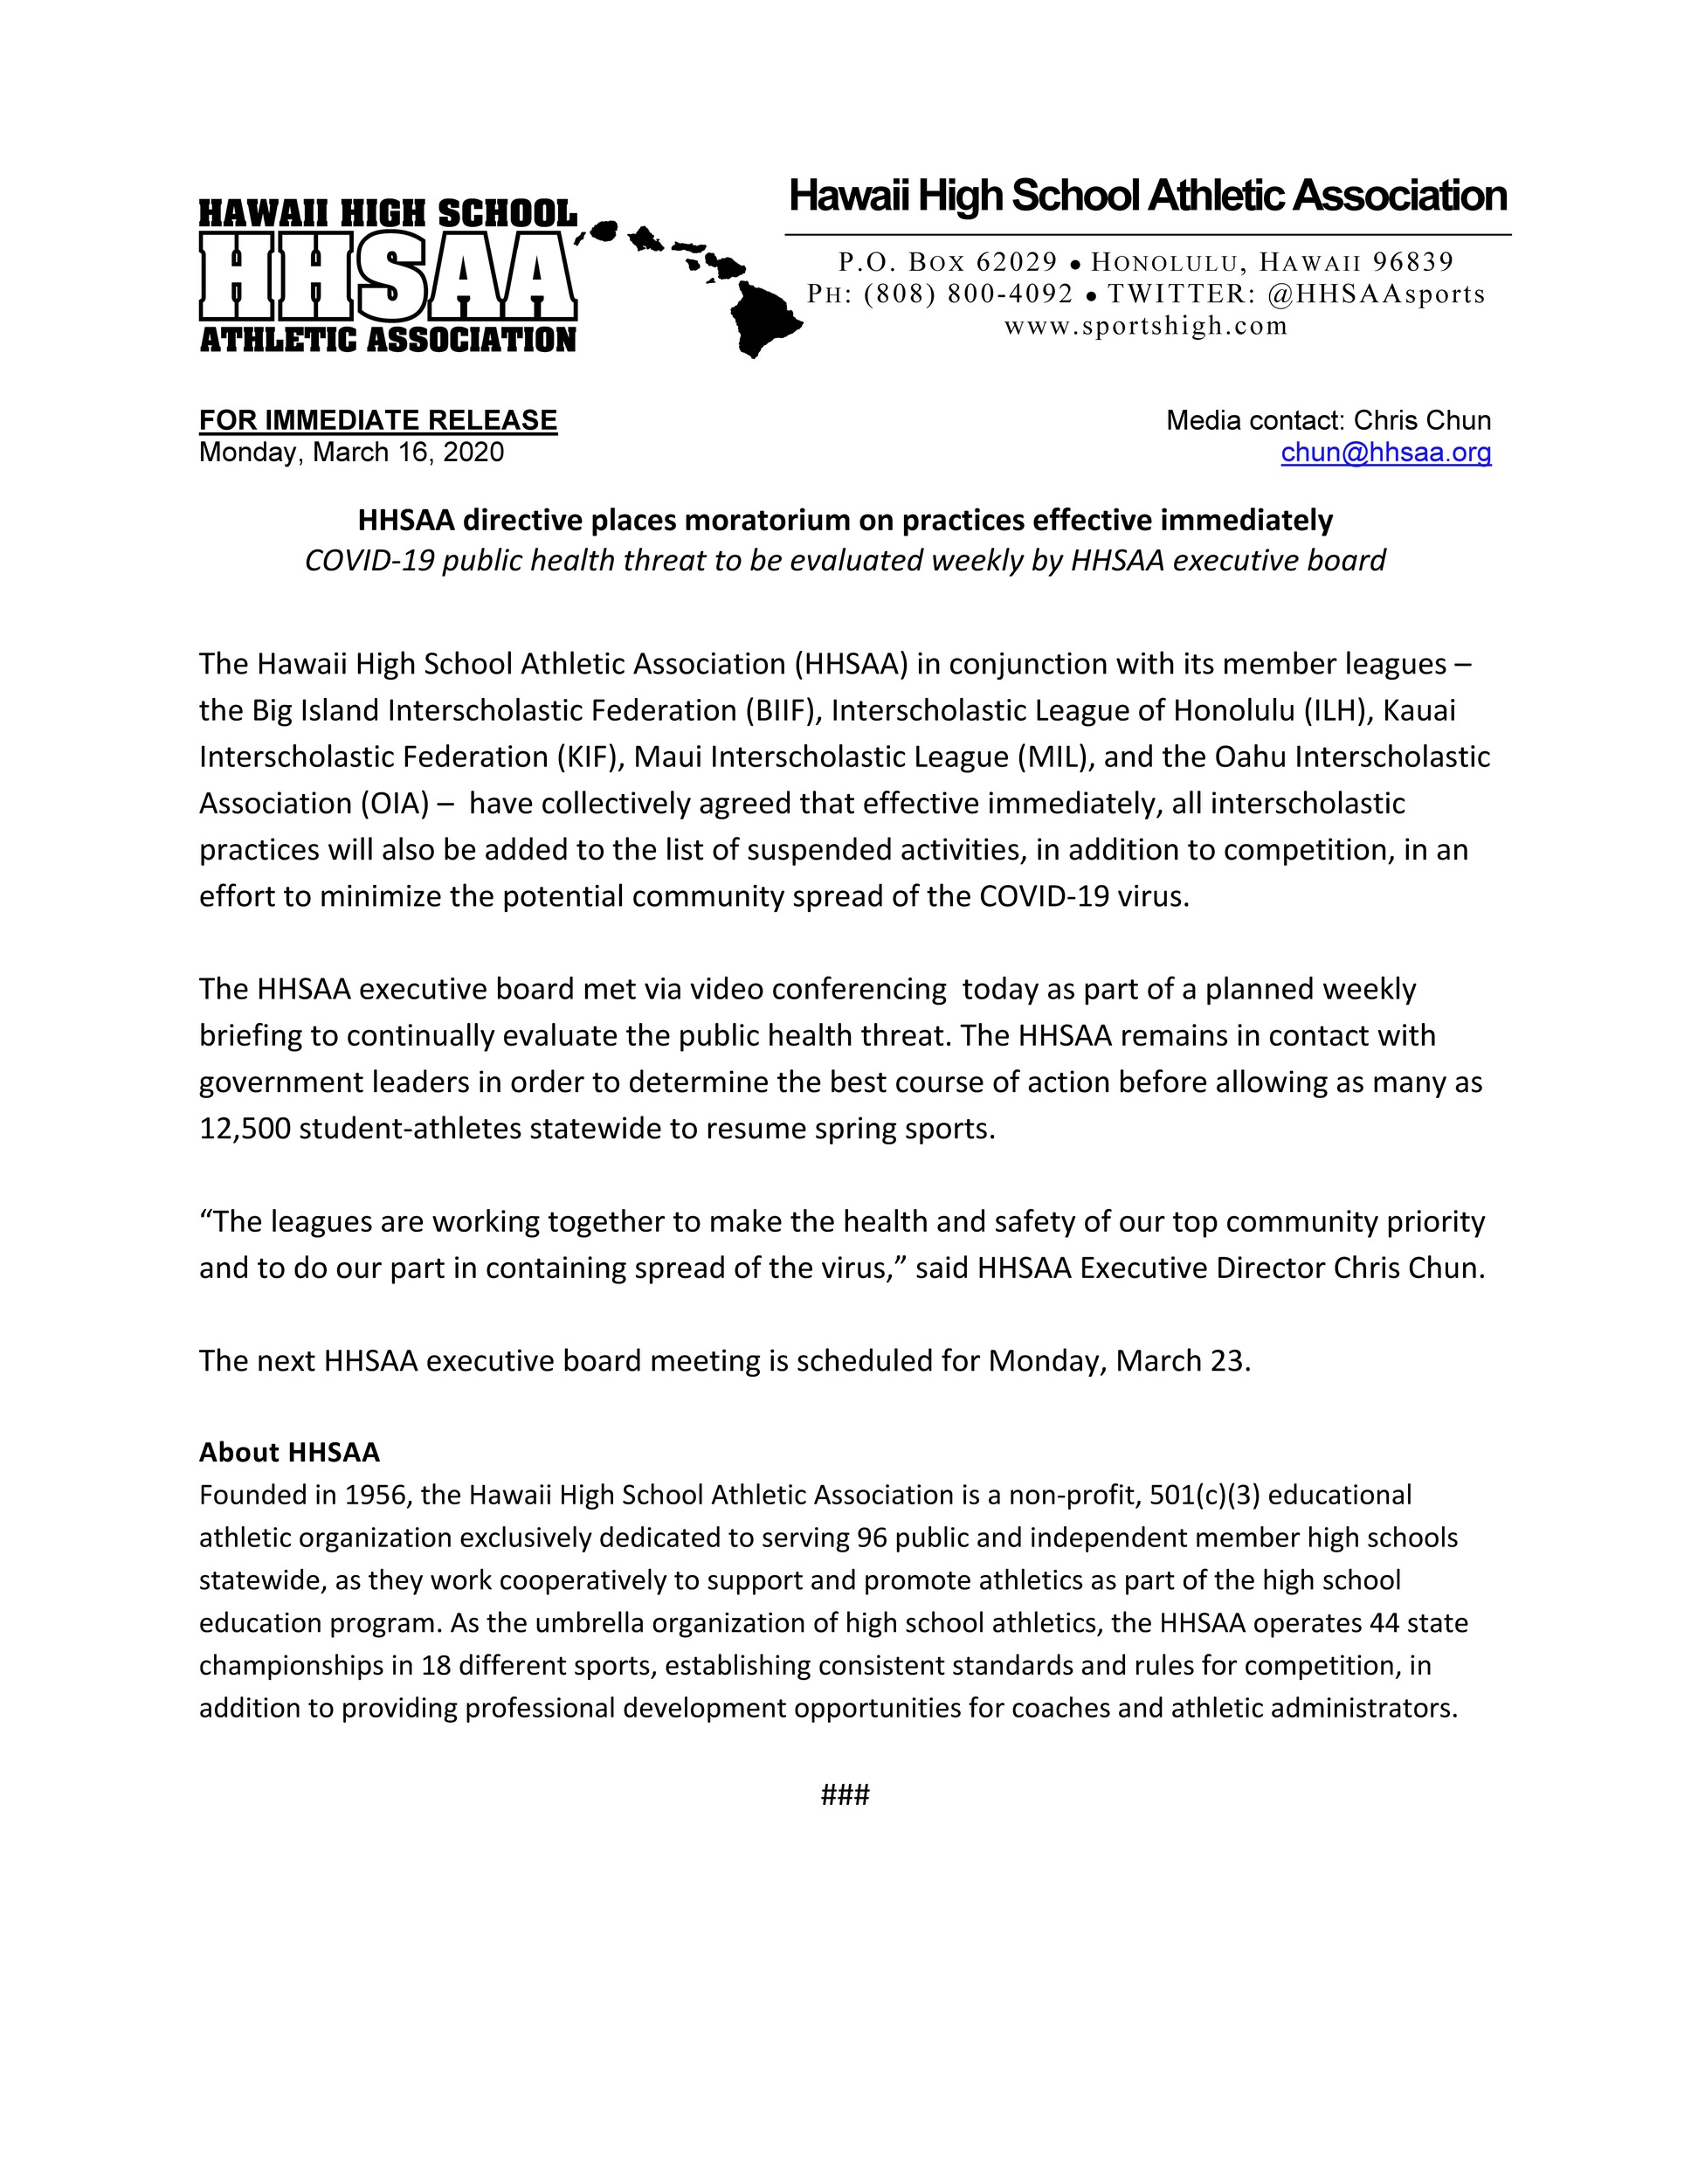 2020-03-16-press-release-hawaii-schools-to-suspend-practice-covid-19